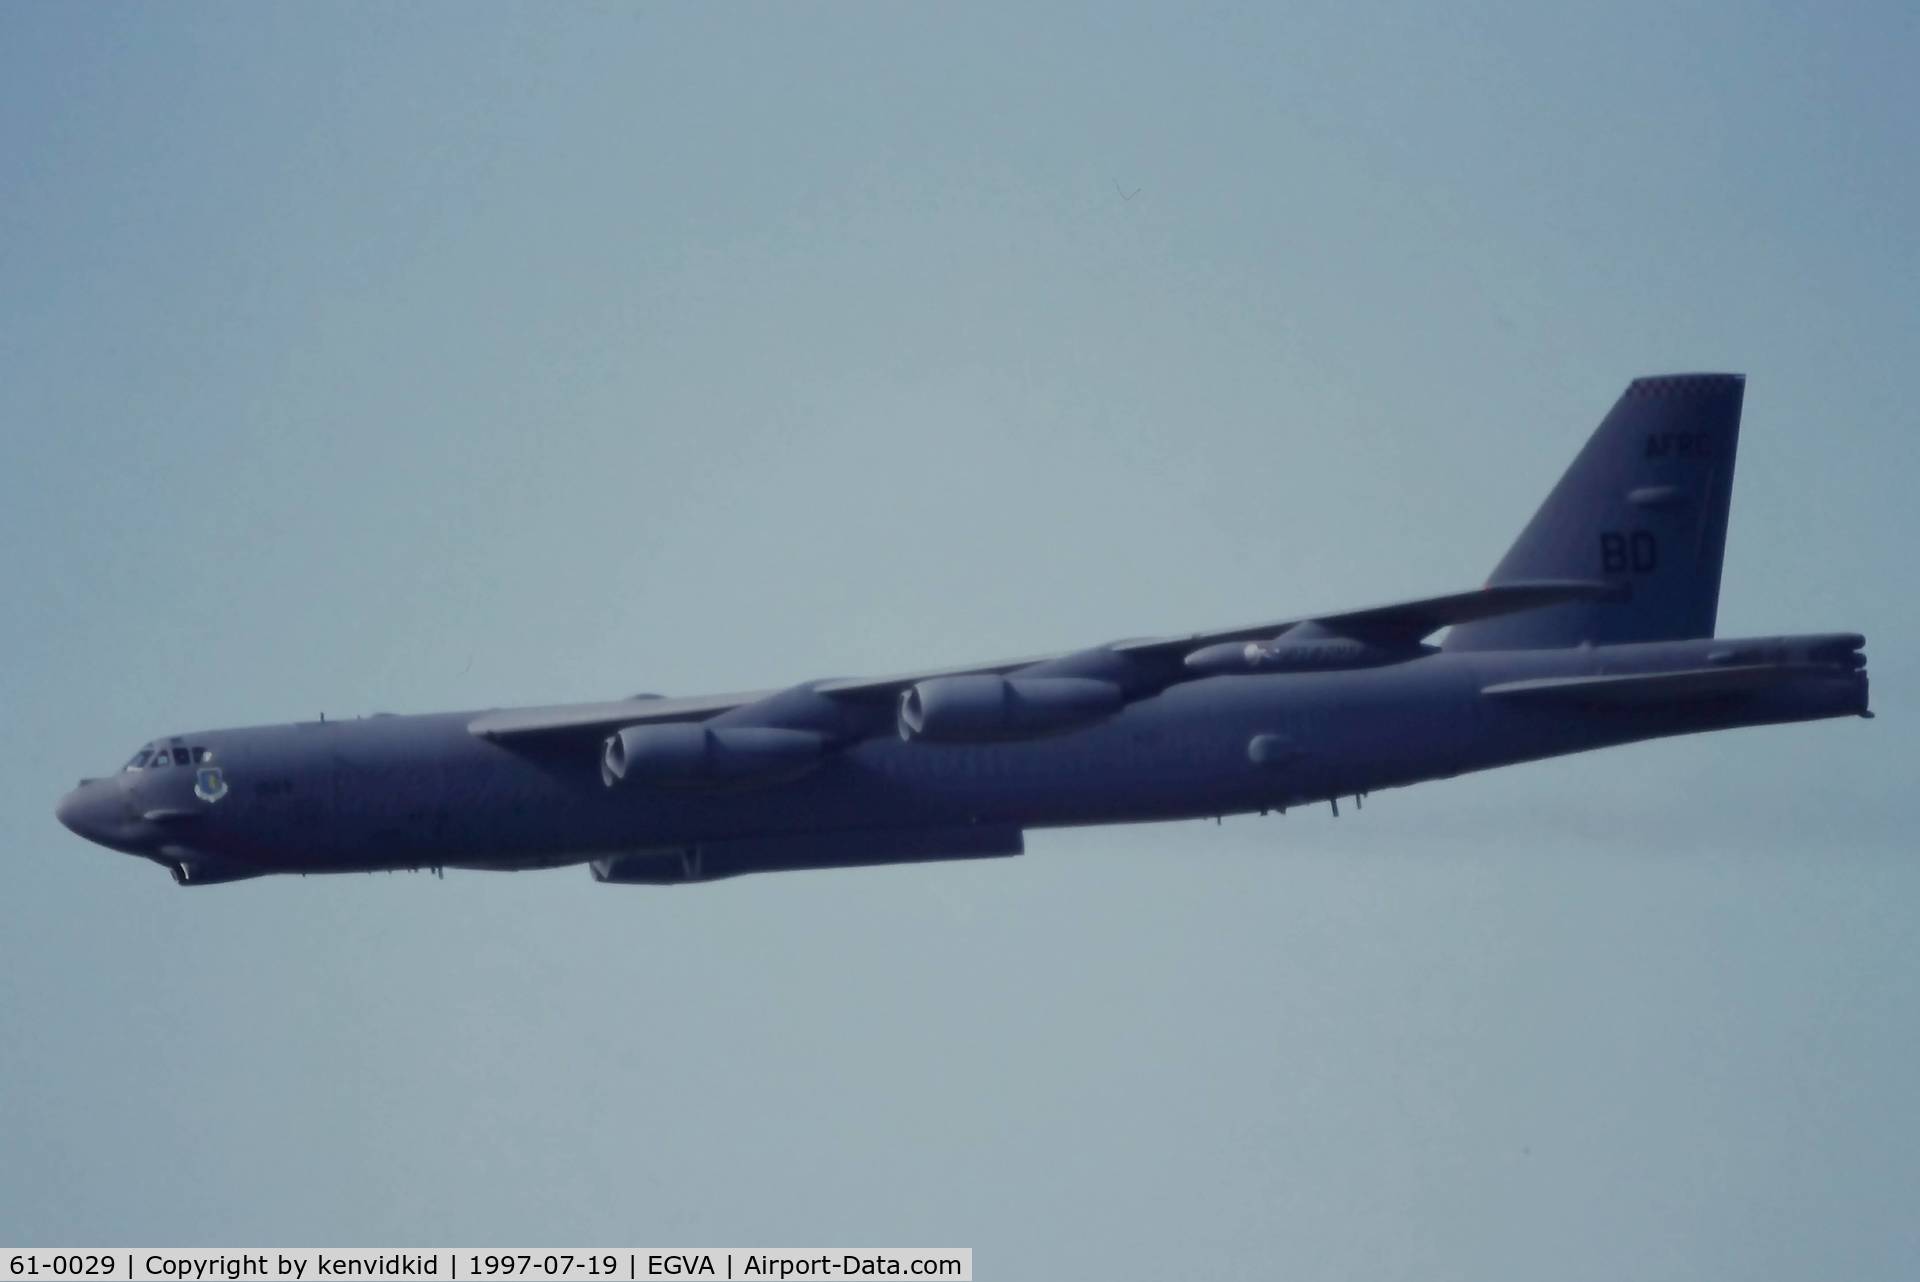 61-0029, 1961 Boeing B-52H Stratofortress C/N 464456, At the 1997 Royal International Air Tattoo.